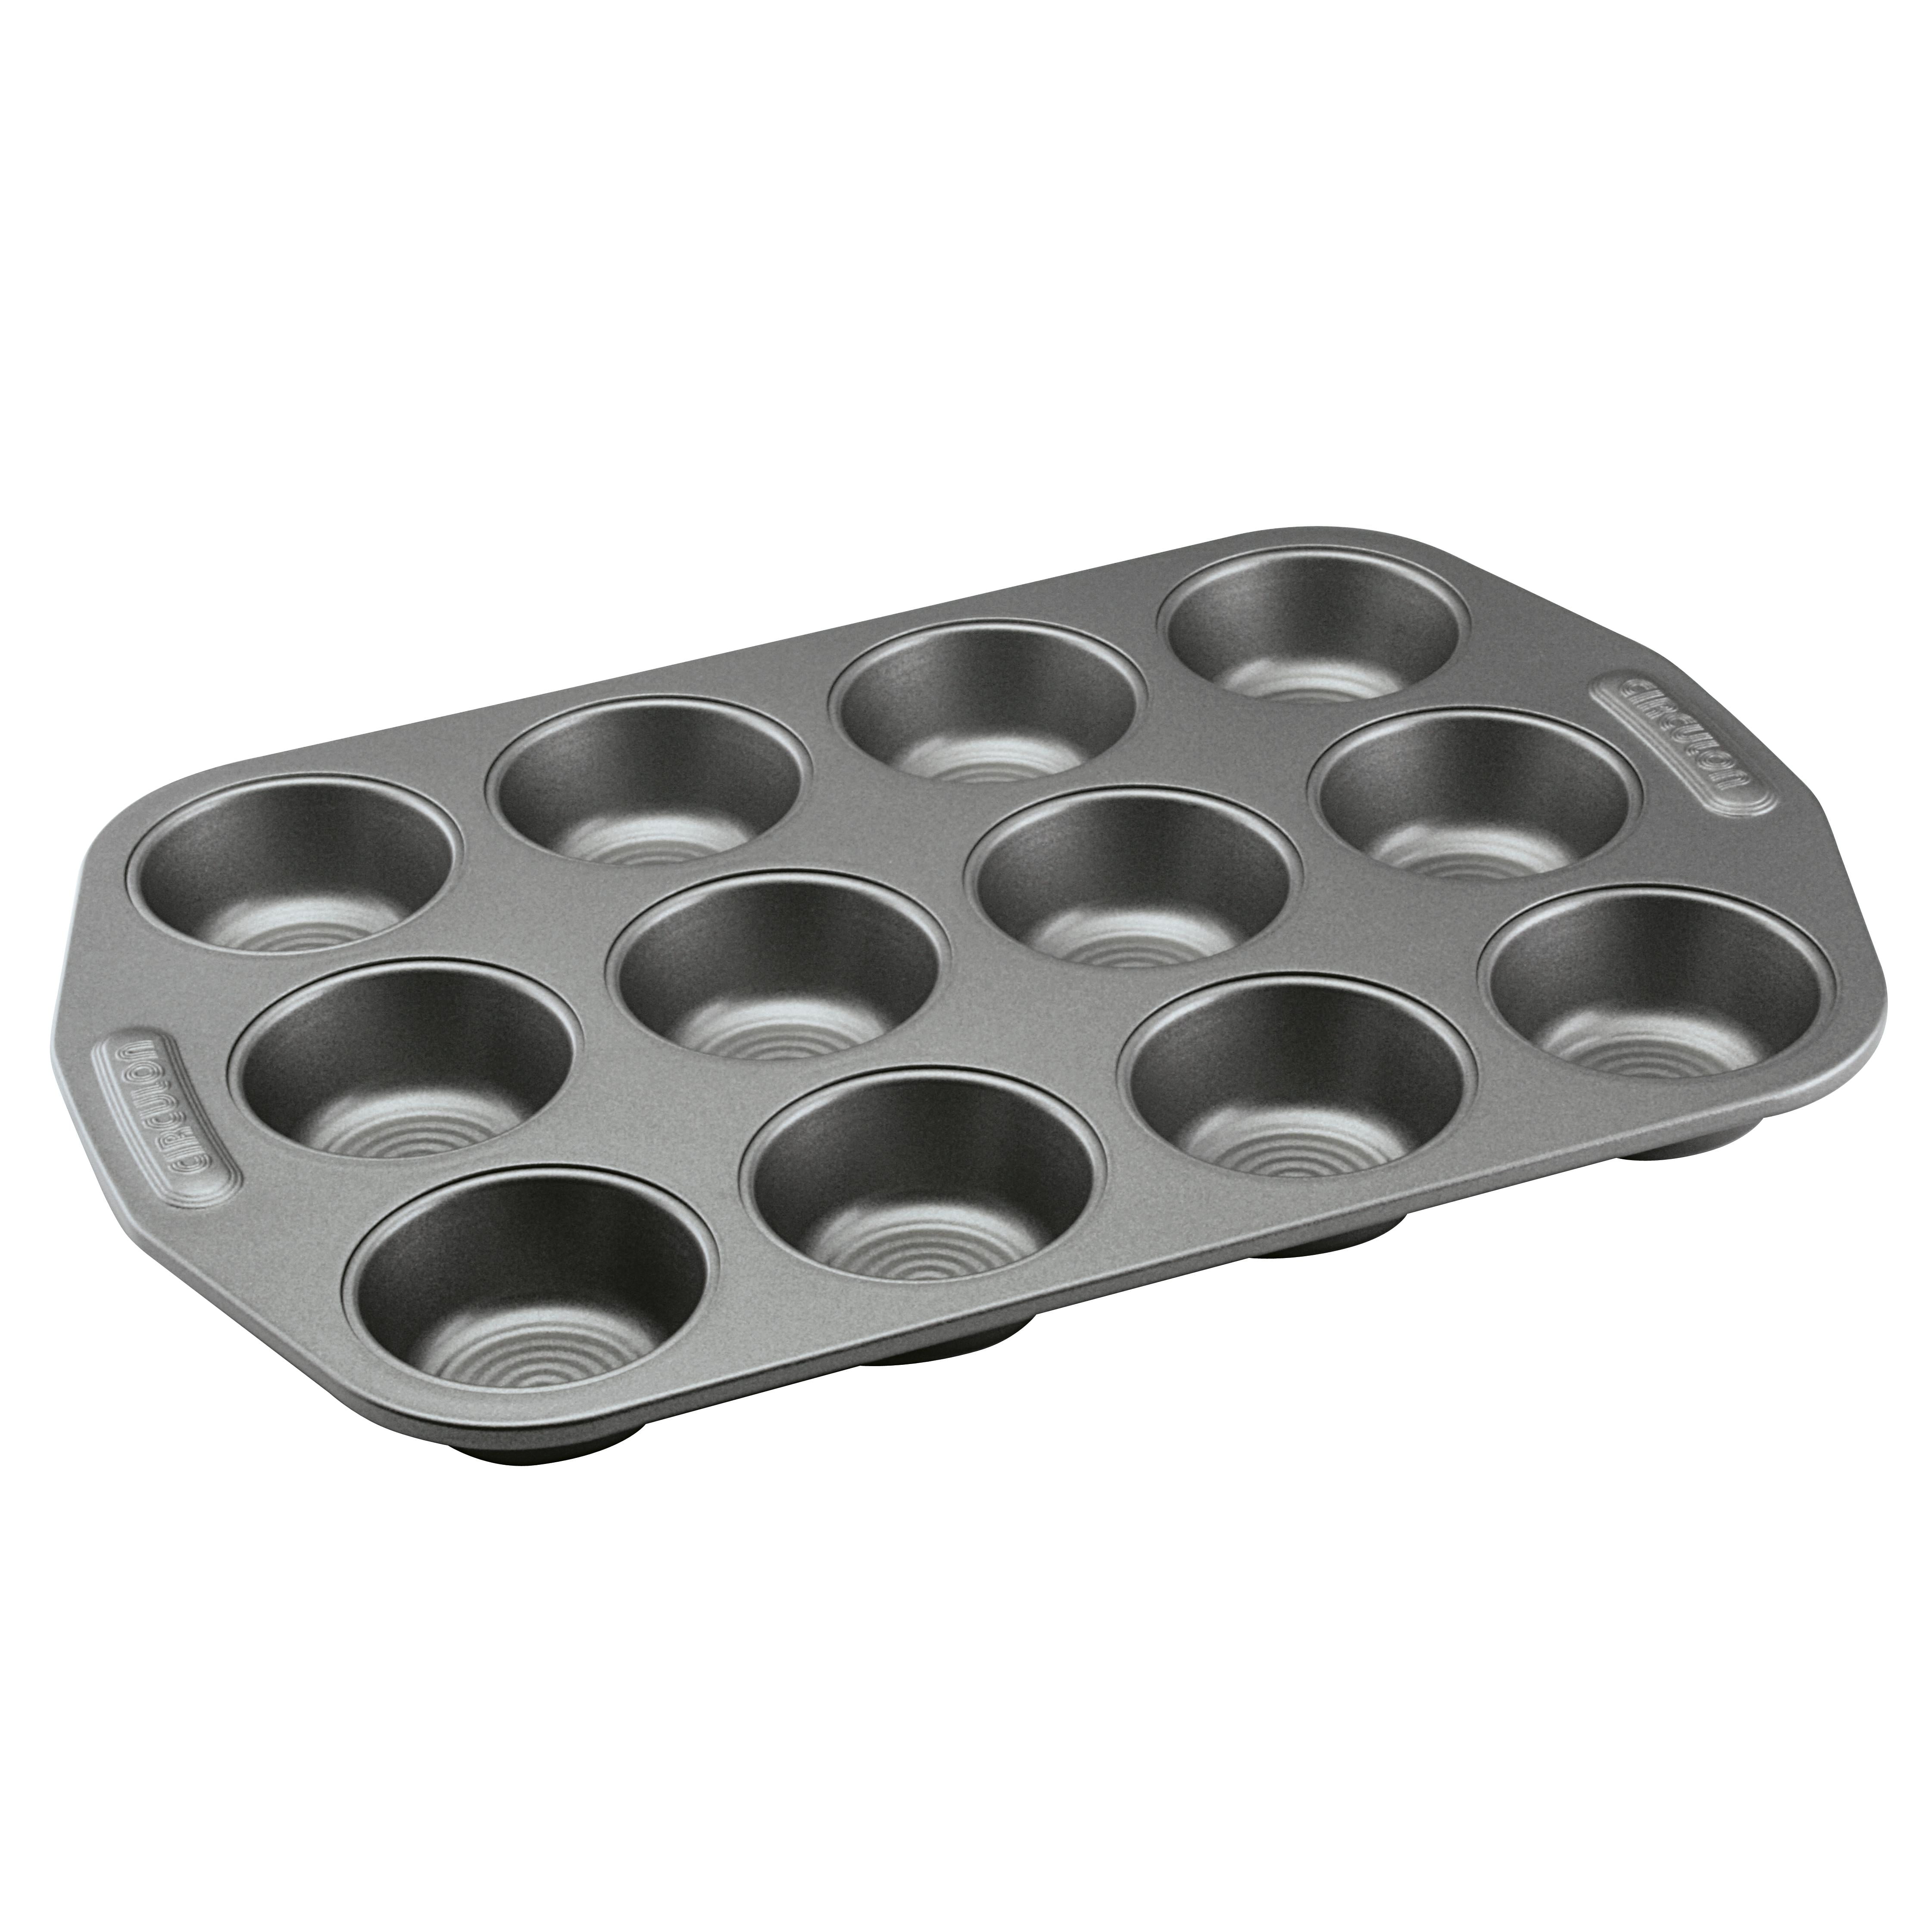 Circulon Bakeware Nonstick Bakeware Set / Baking Pans, 10 Piece & Reviews